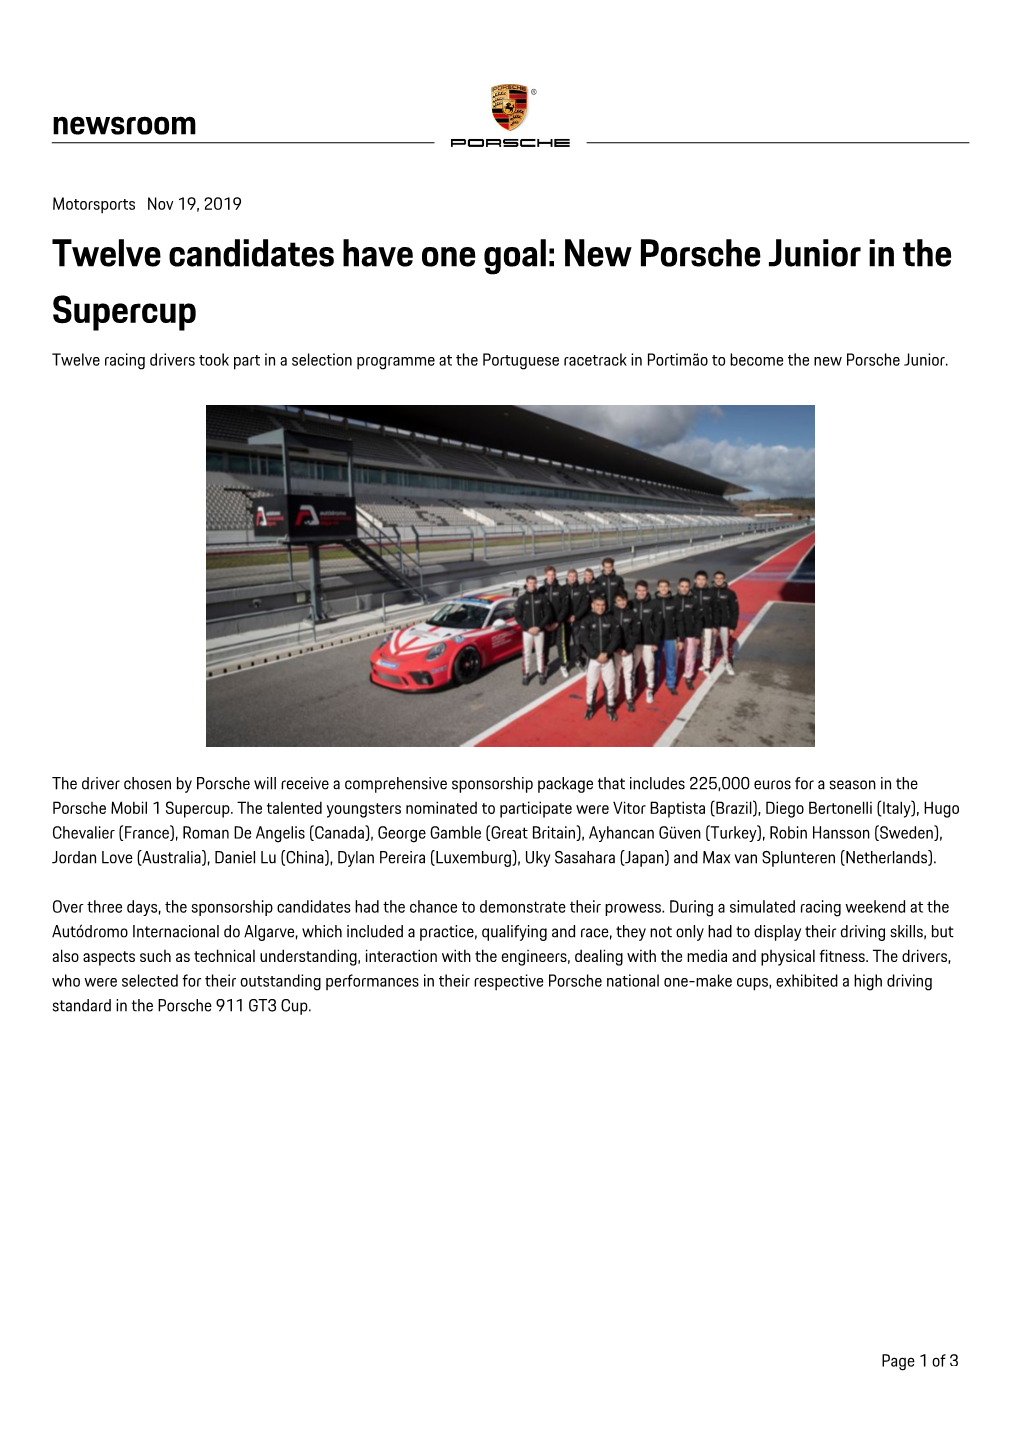 New Porsche Junior in the Supercup, Press Release, 11/19/2019, Porsche AG